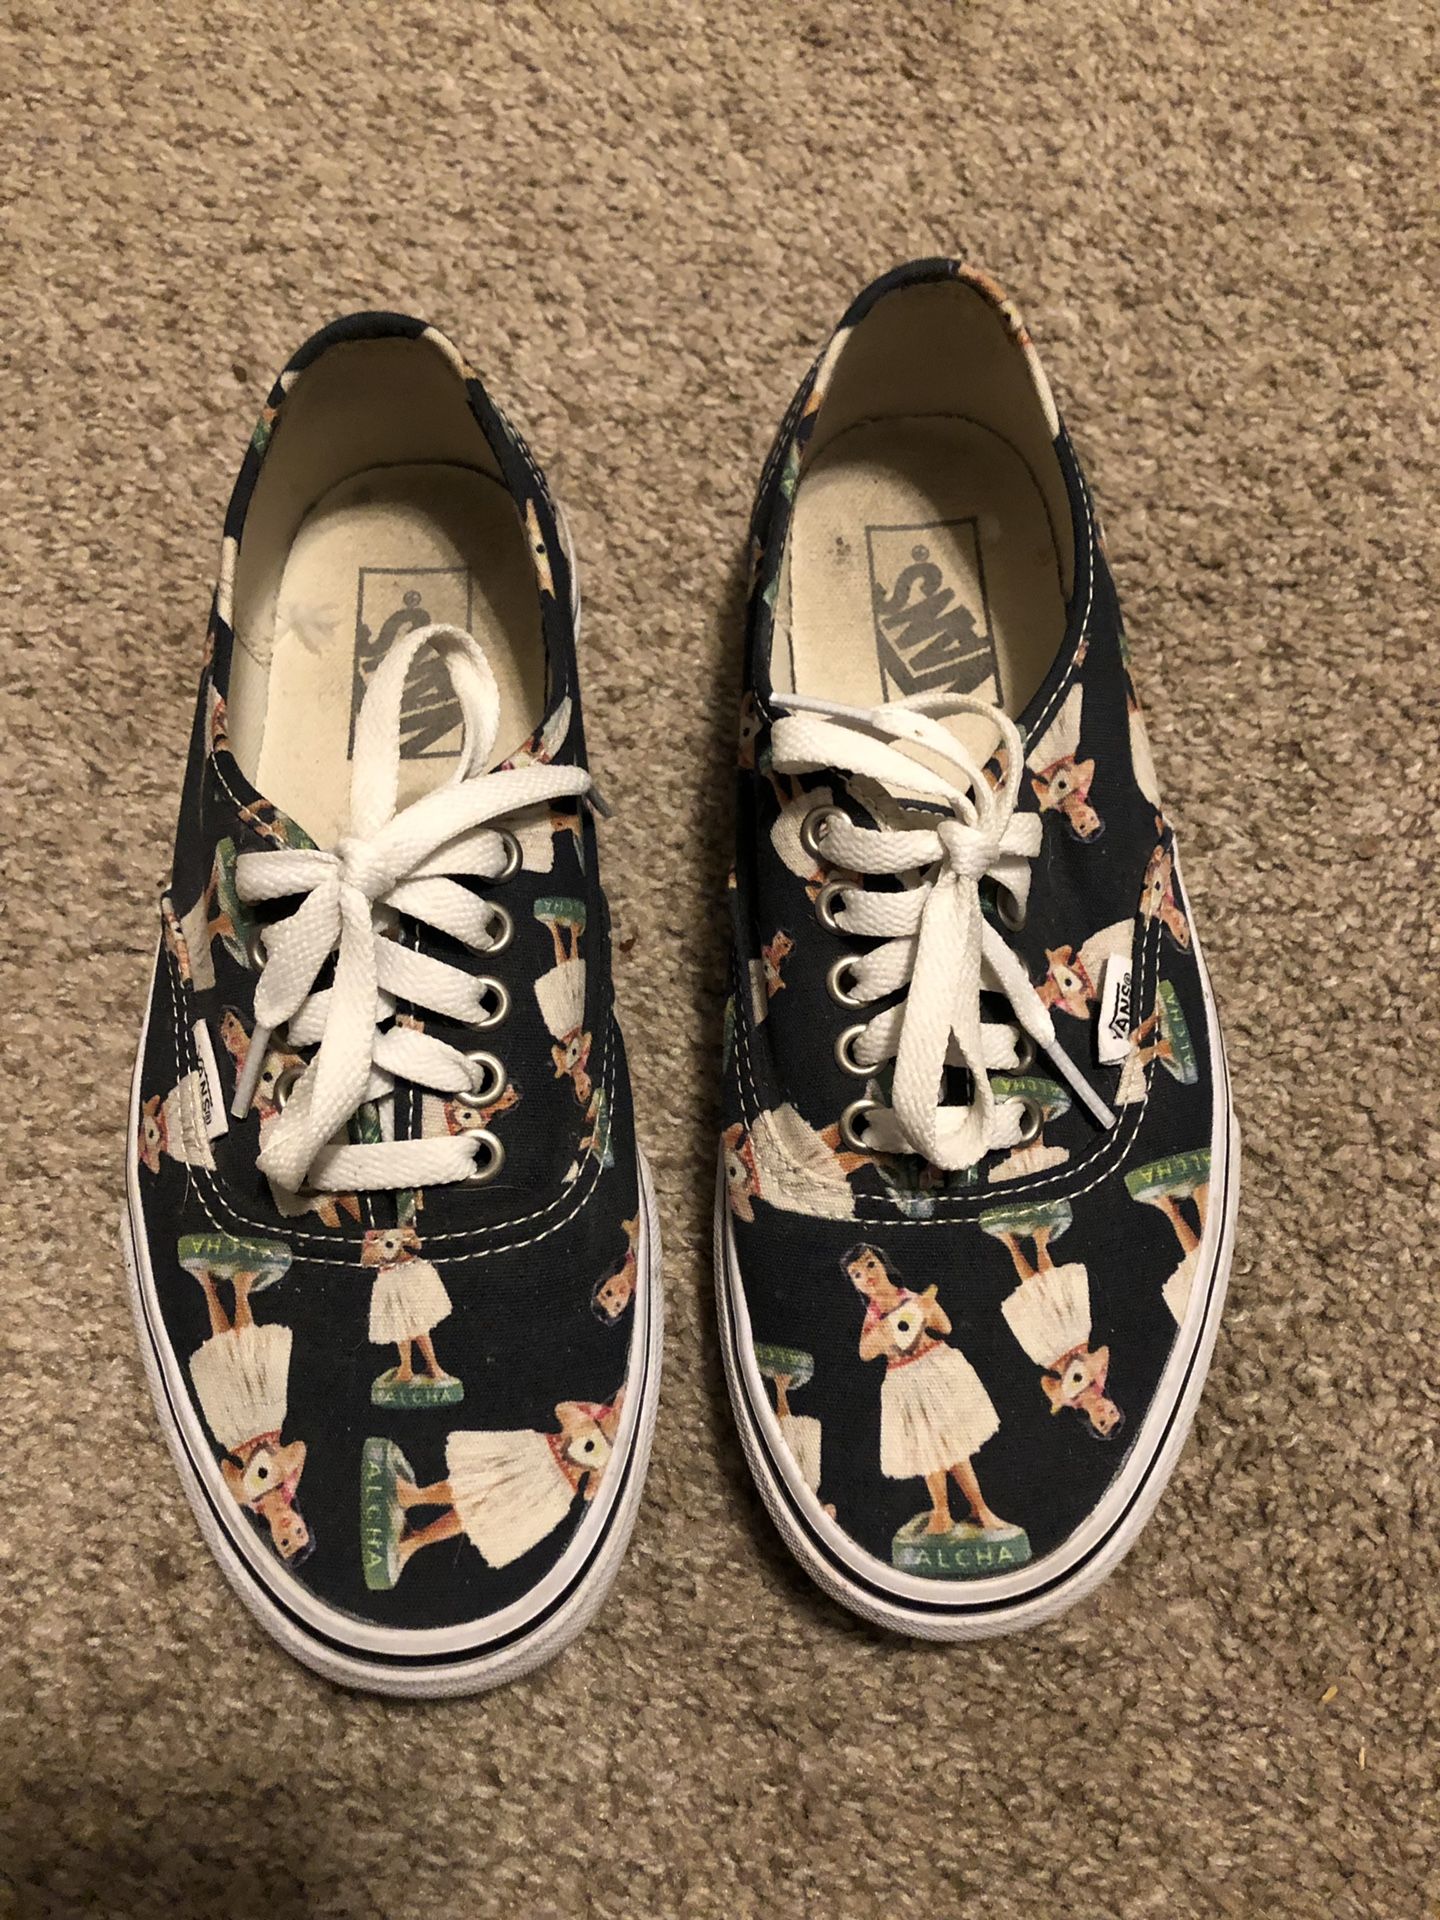 Vans - Aloha Hula Girl shoes